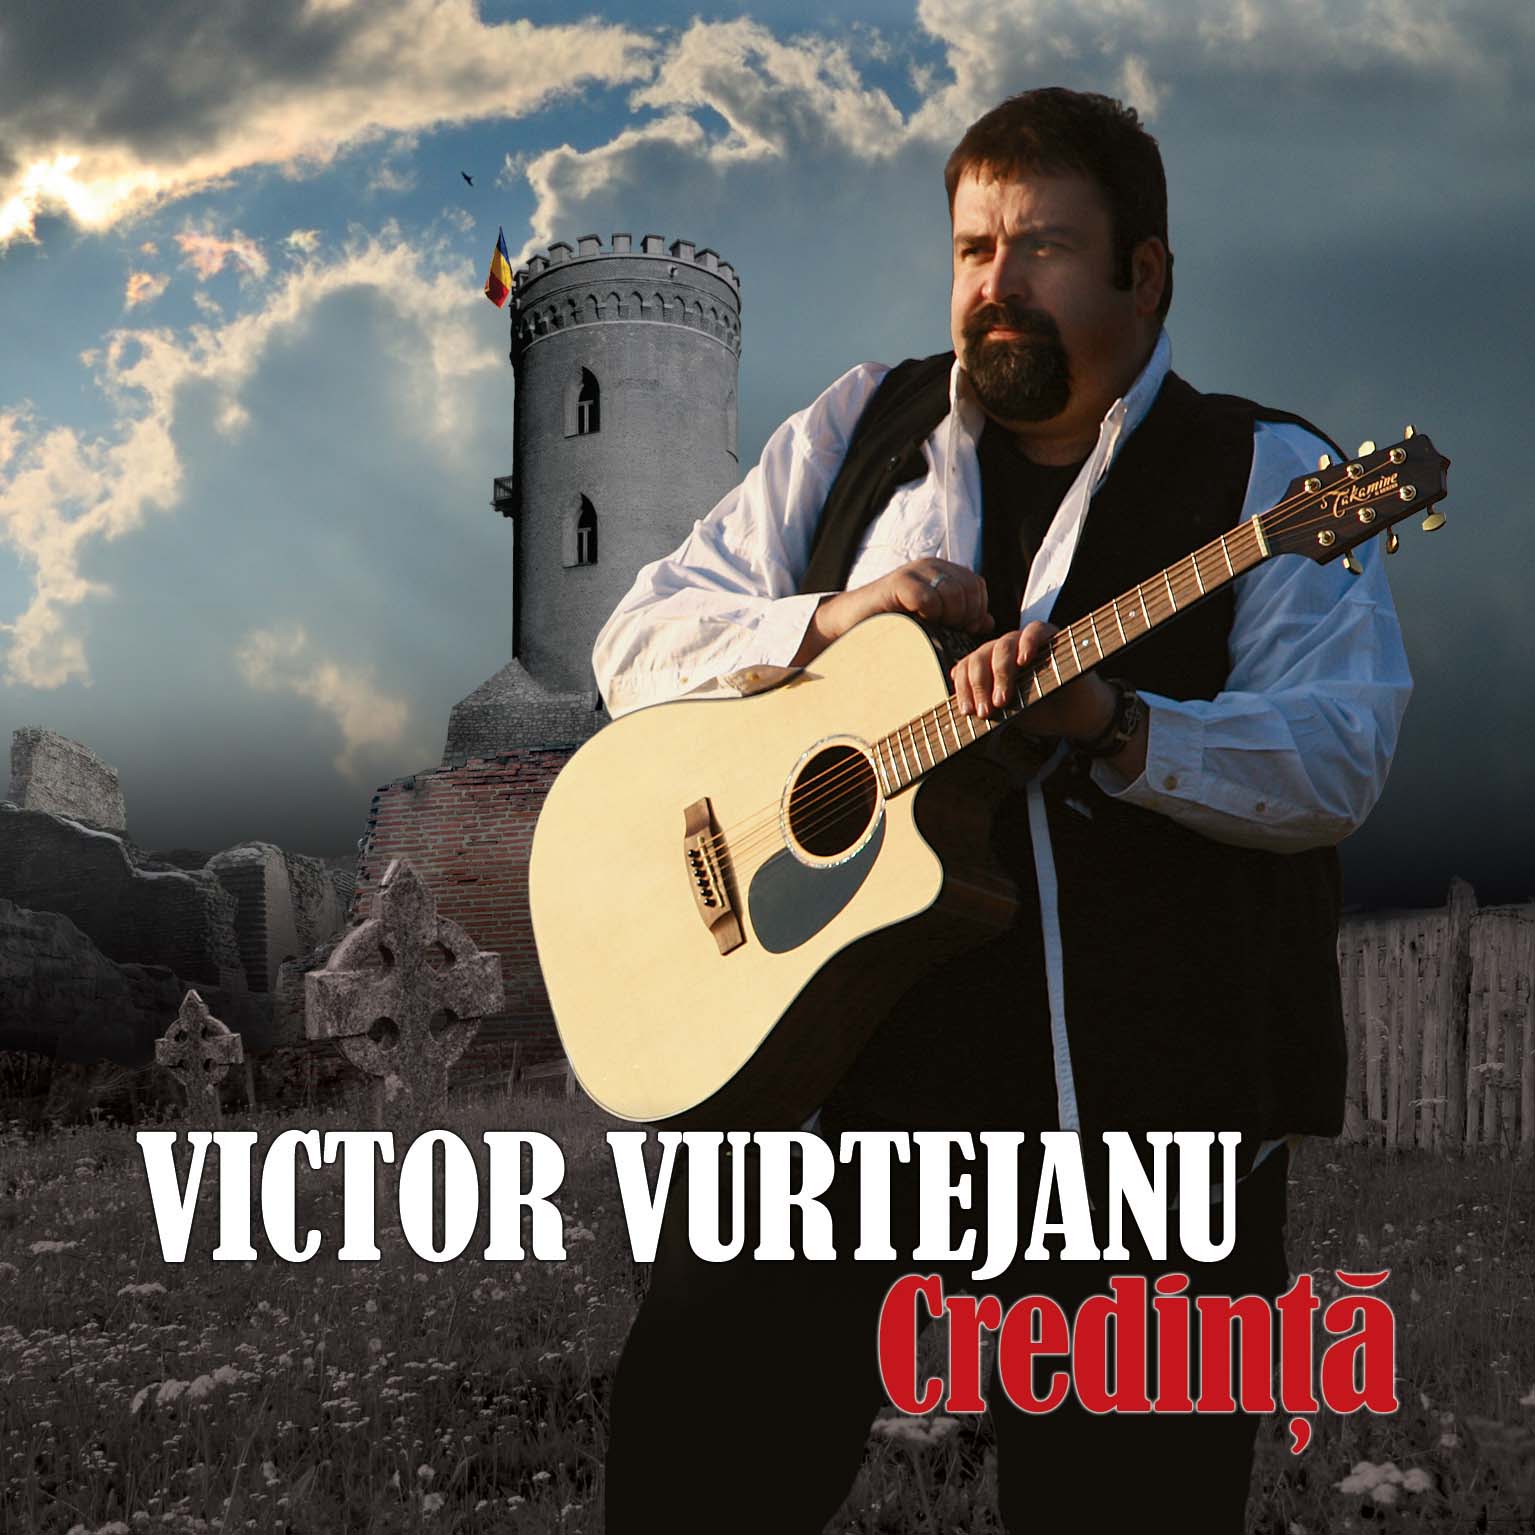 Victor Vurtejanu Credinta